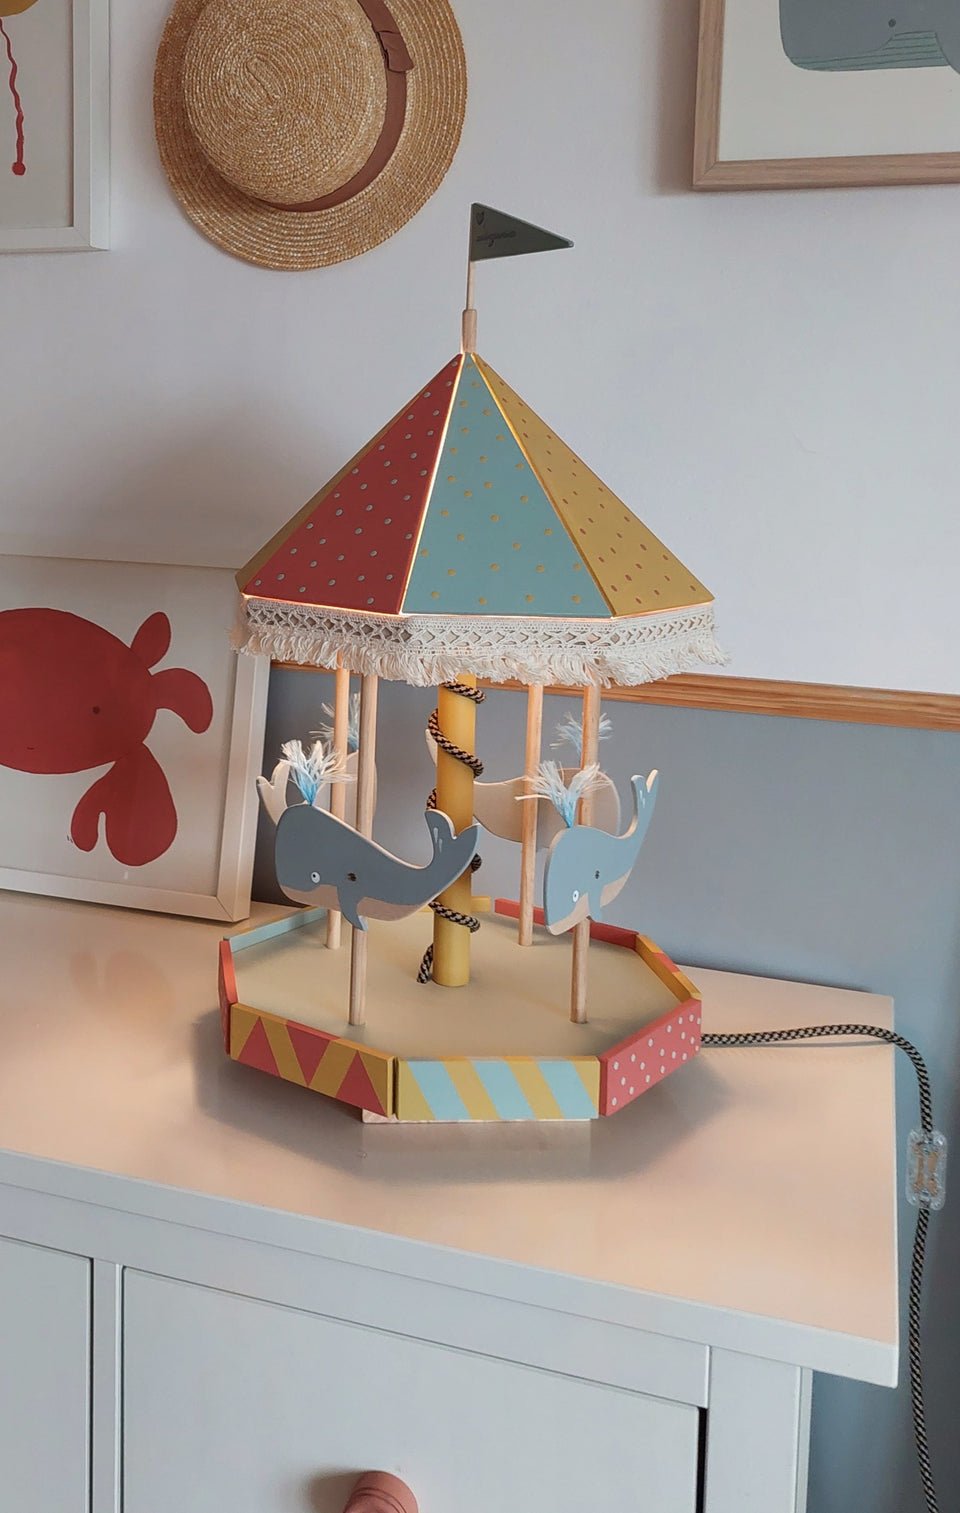 Candeeiro Carrossel Baleia - Whale Carousel Lamp